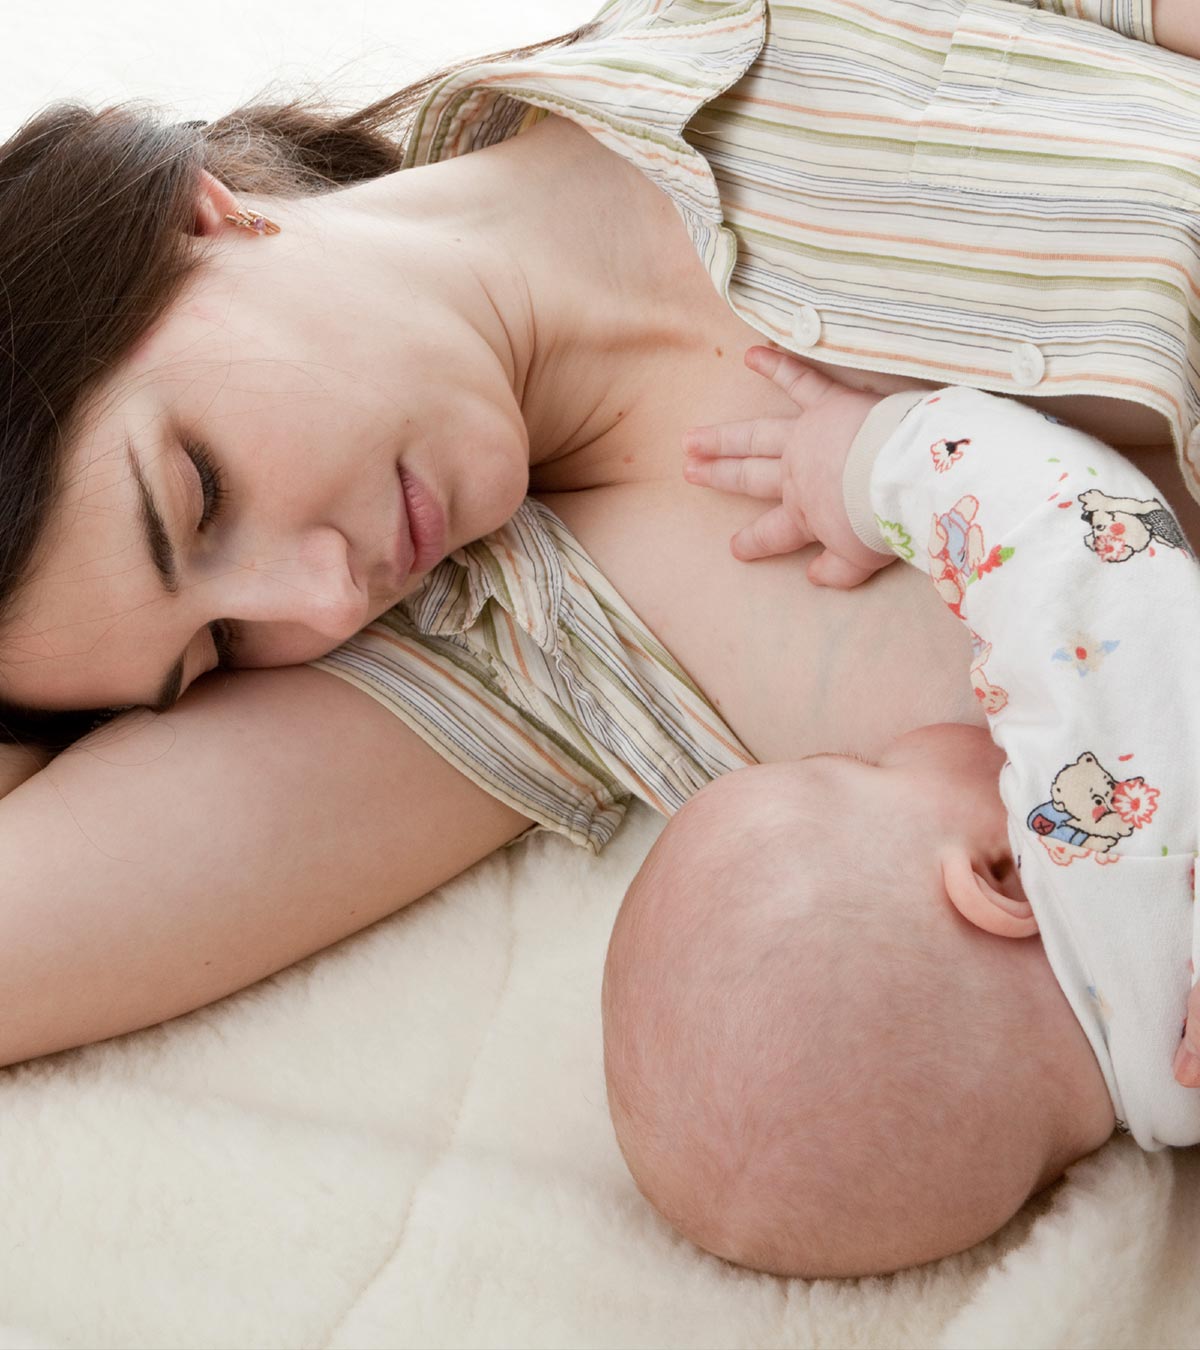 Is It Harmful To Fall Asleep While Breastfeeding?